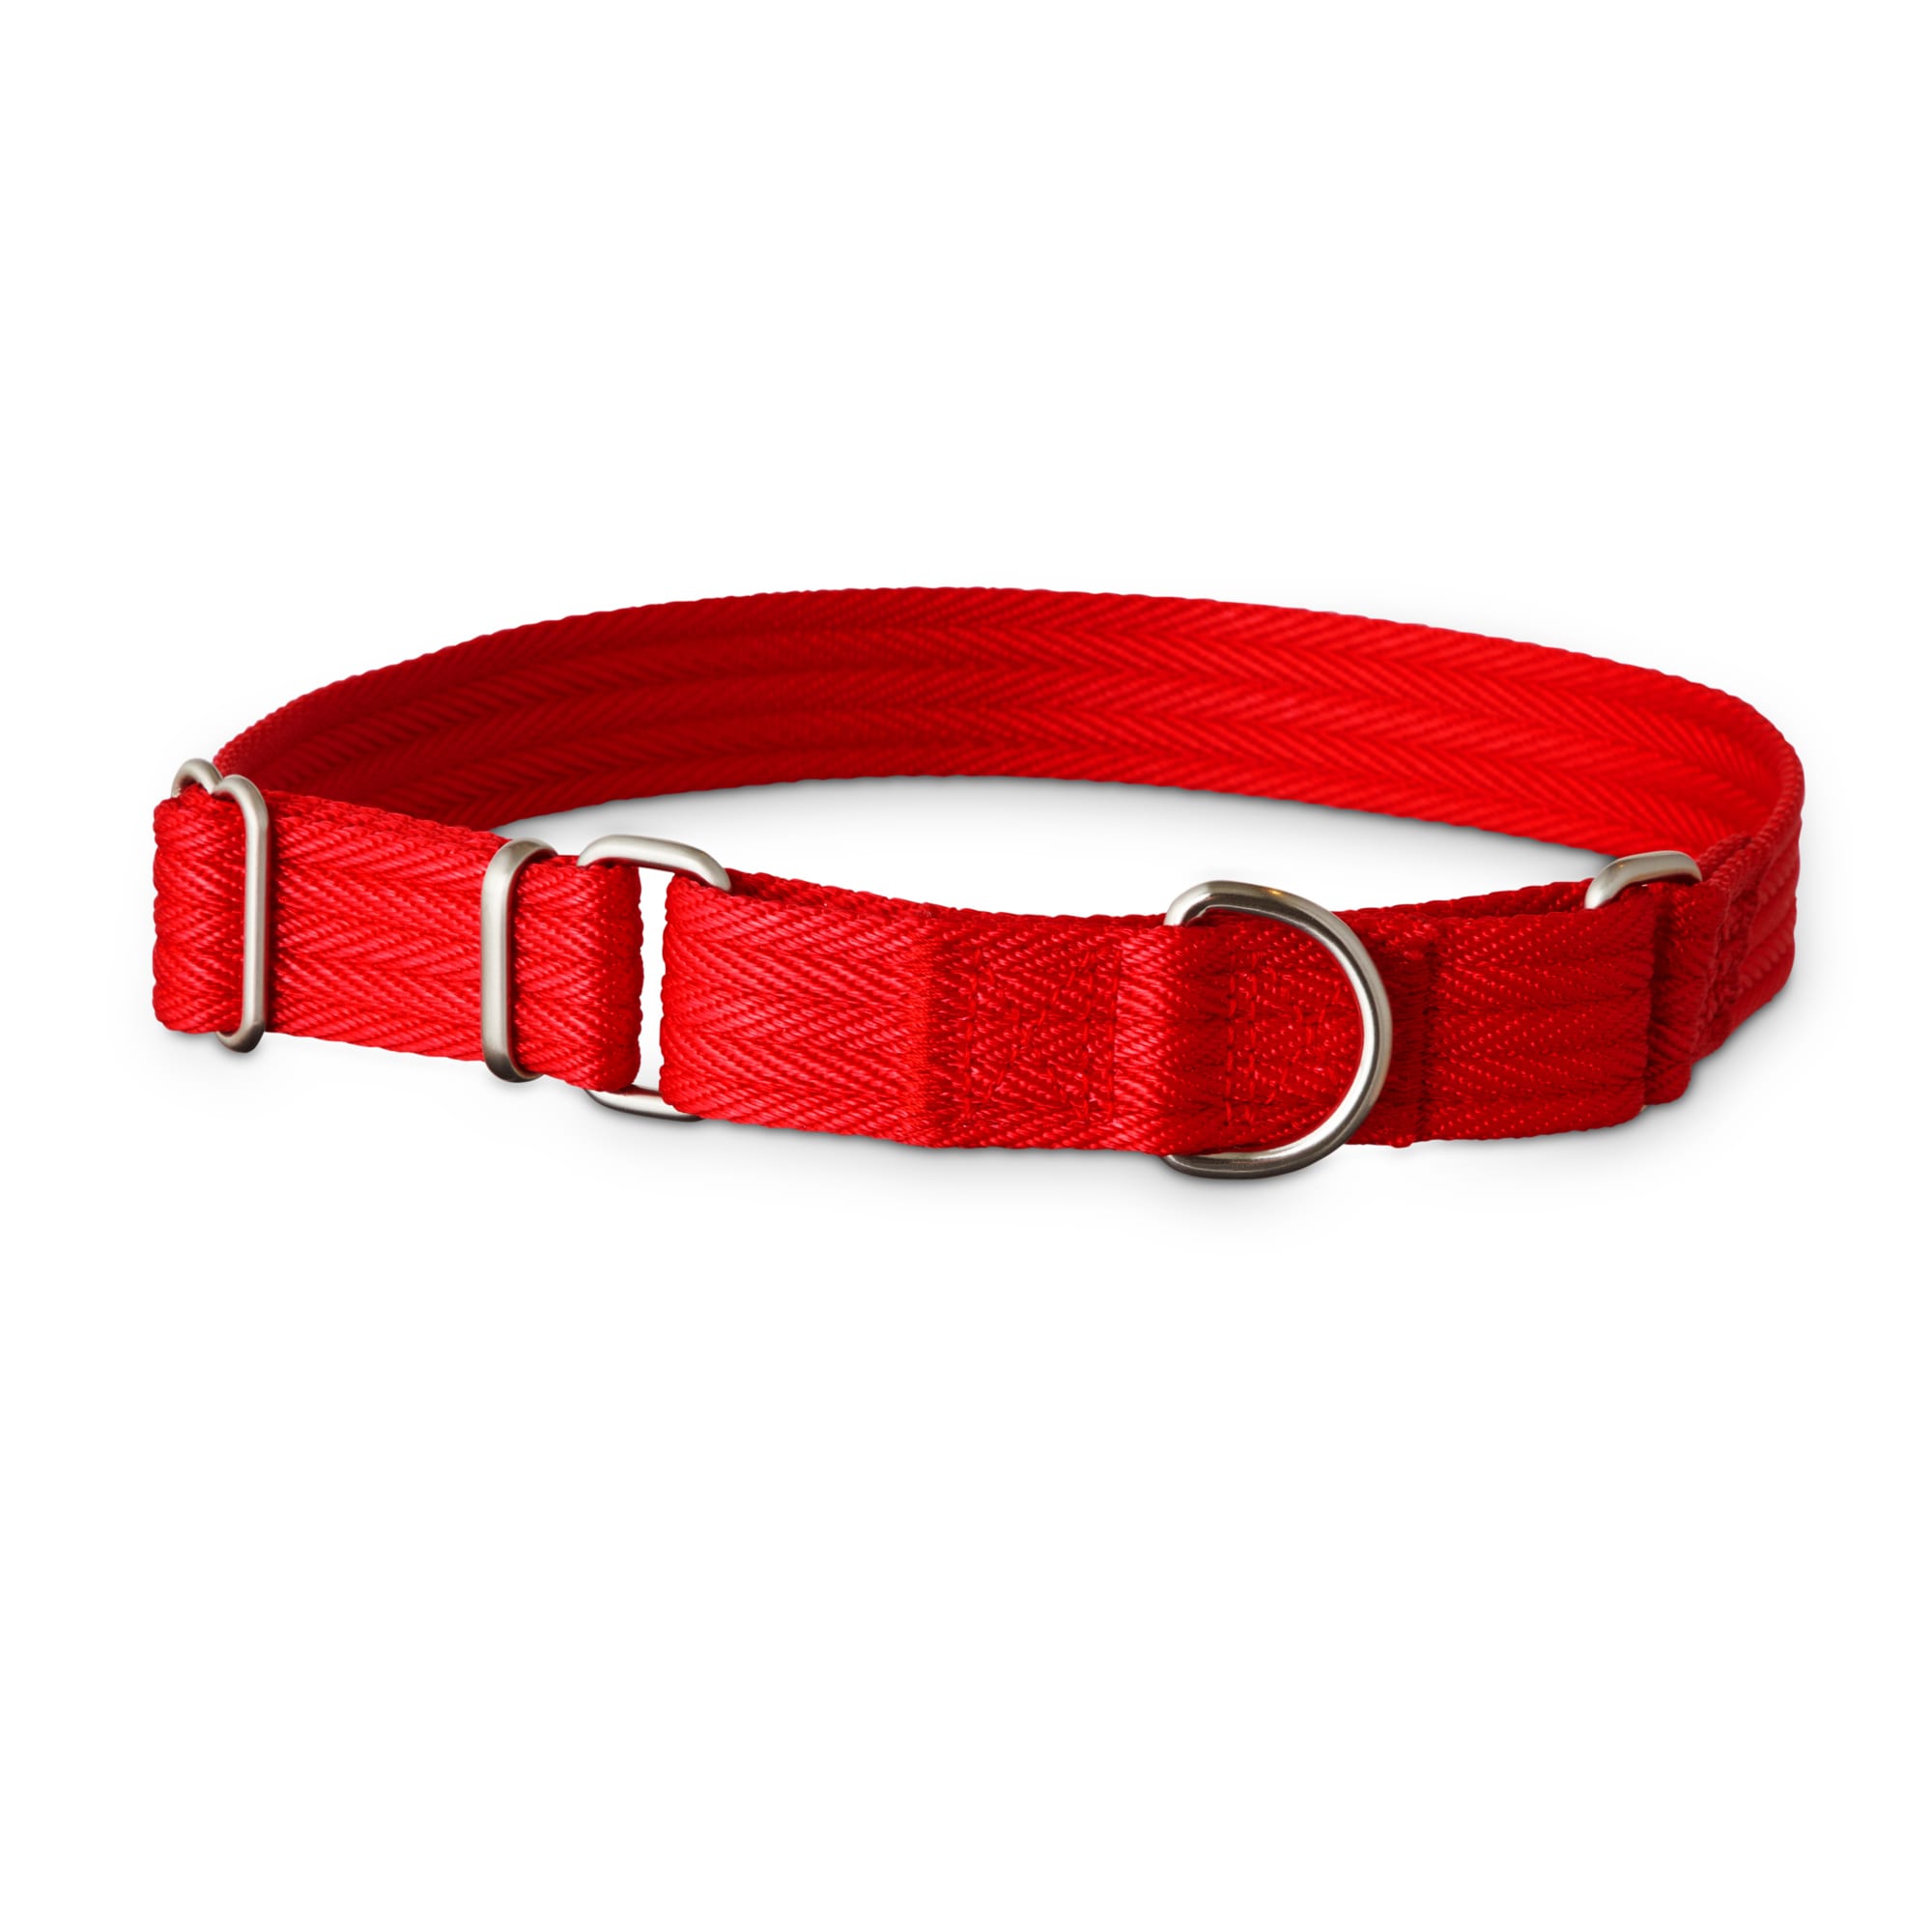 YOULY The Wanderer Red & Orange Patterned Dog Collar, Medium